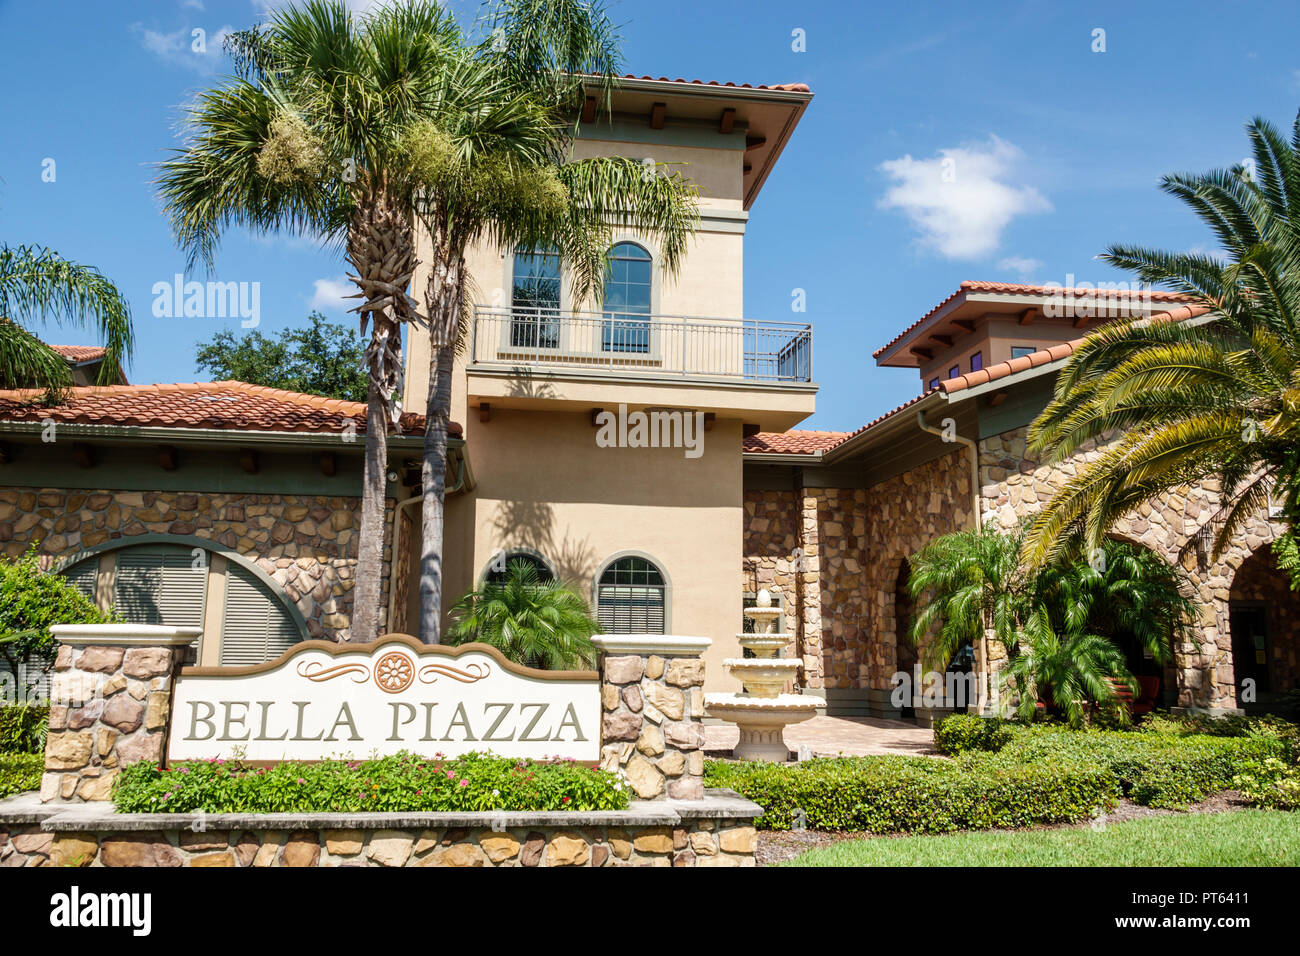 Florida,Davenport,Bella Piazza,rental condominiums,sign front entrance,FL180731193 Stock Photo